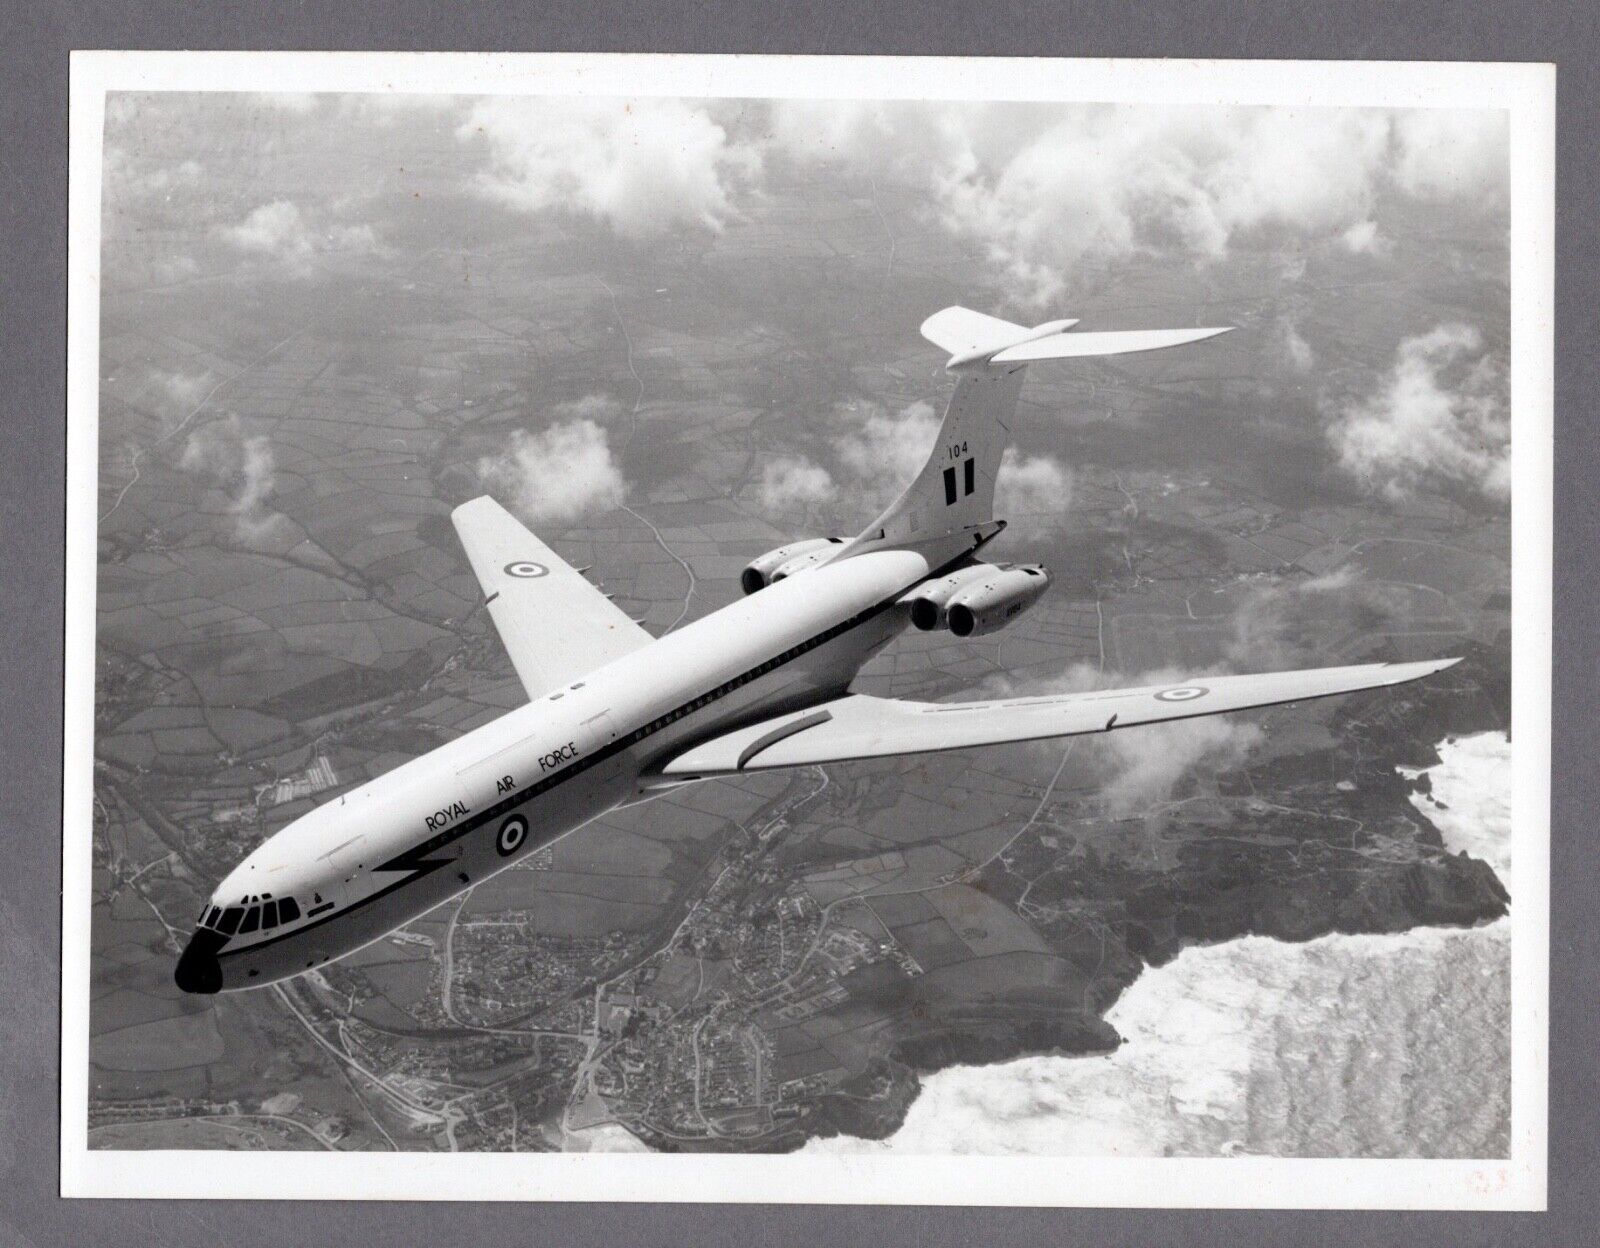 RAF VICKERS VC10 C1 LARGE ORIGINAL VINTAGE PHOTO ROYAL AIR FORCE 2